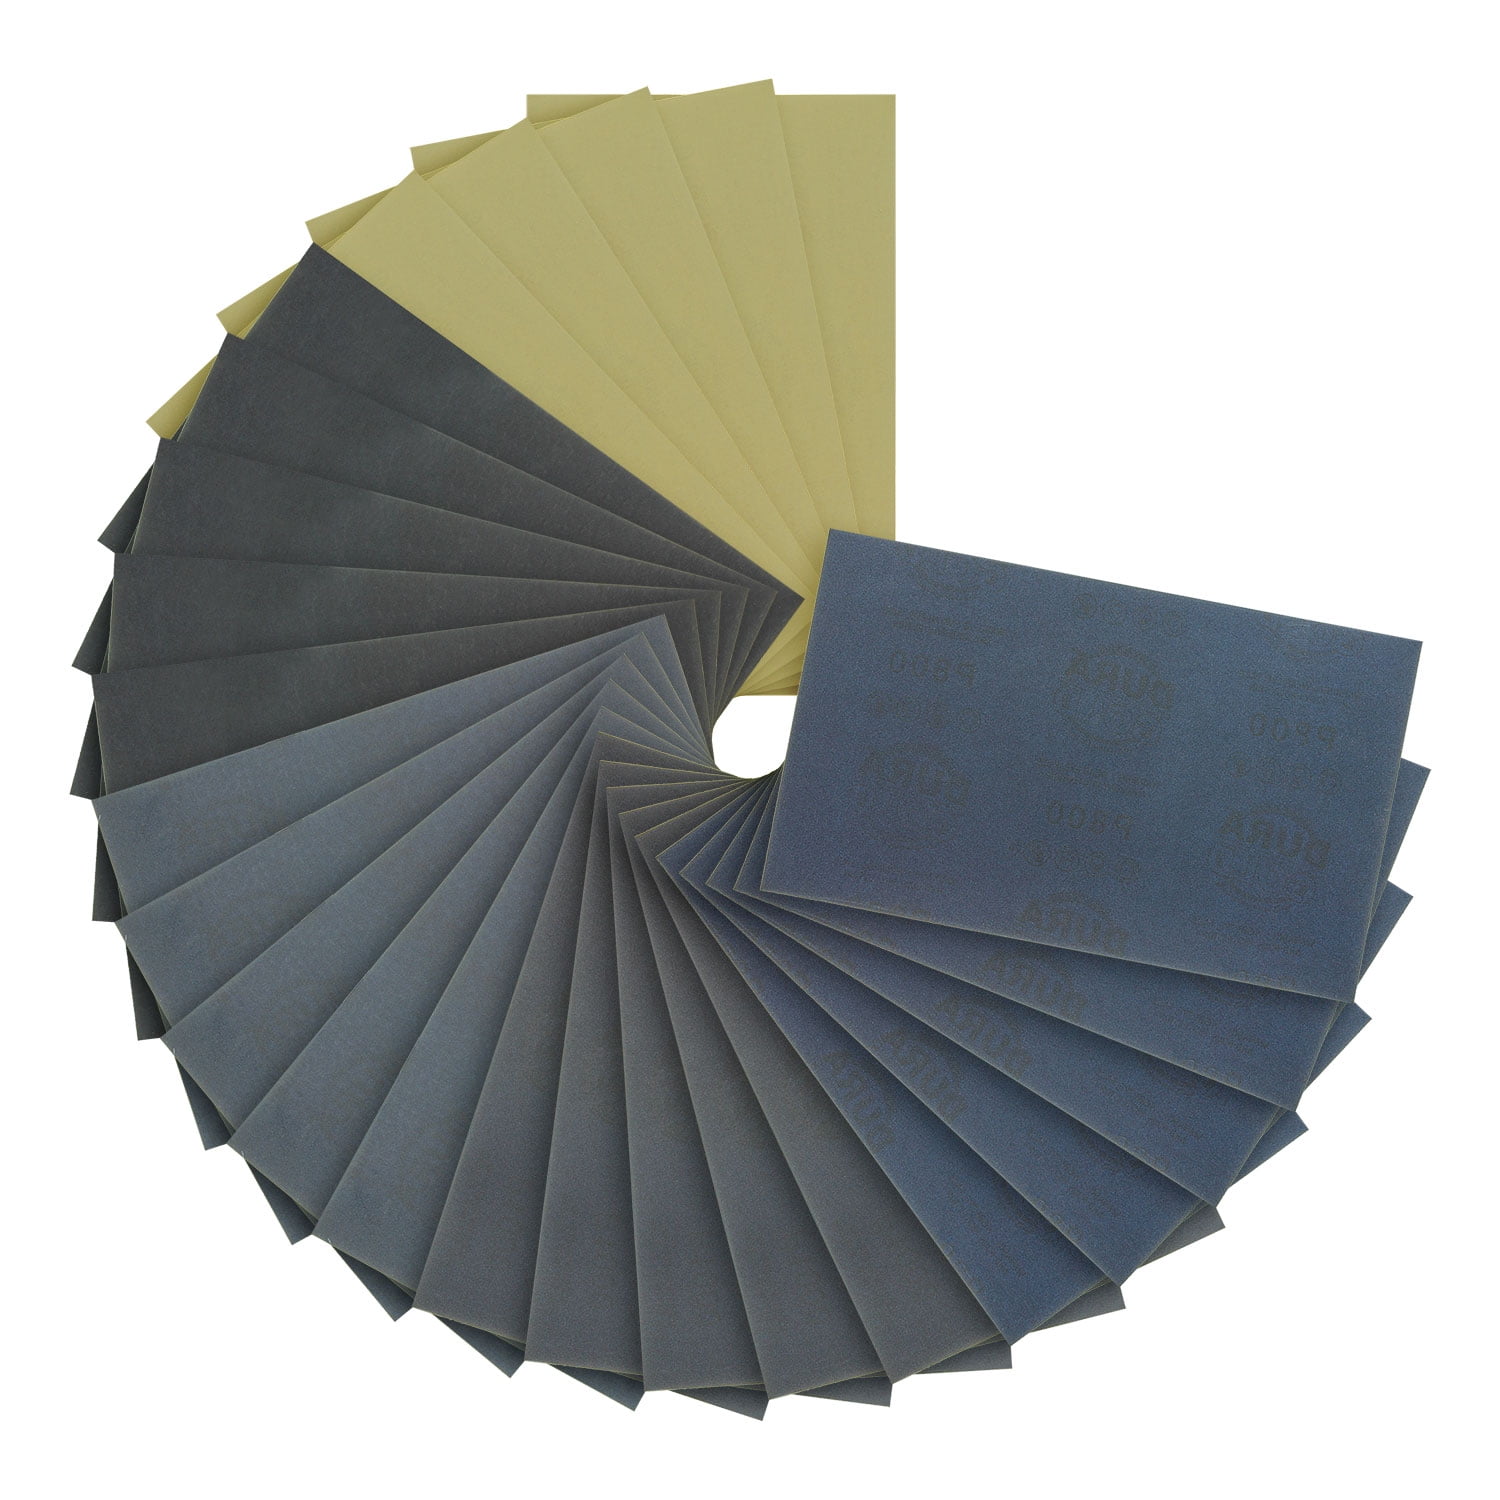 LotFancy Sandpaper, 45PCS, 80 to 3000 Grit Sand Paper Assortment, 9 x 3.6  Silicon Carbide Dry Wet Sanding Sheet, for Wood Furniture, Metal Sanding